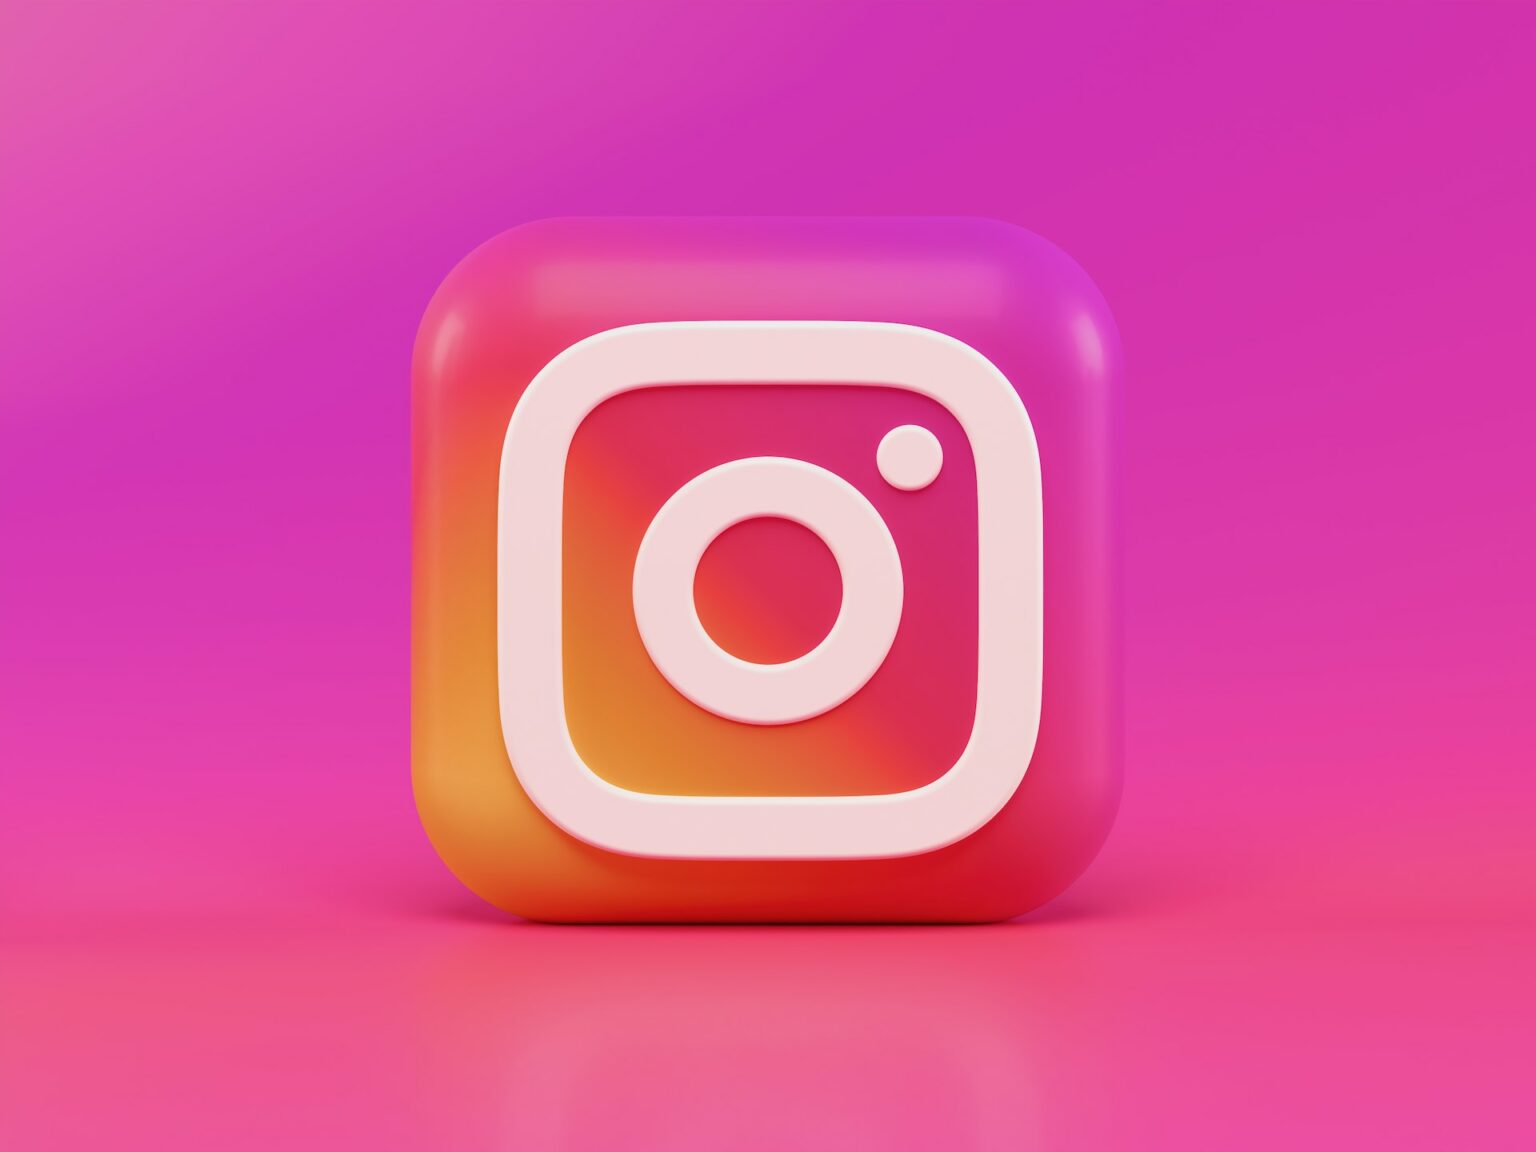 HD wallpaper of Instagram